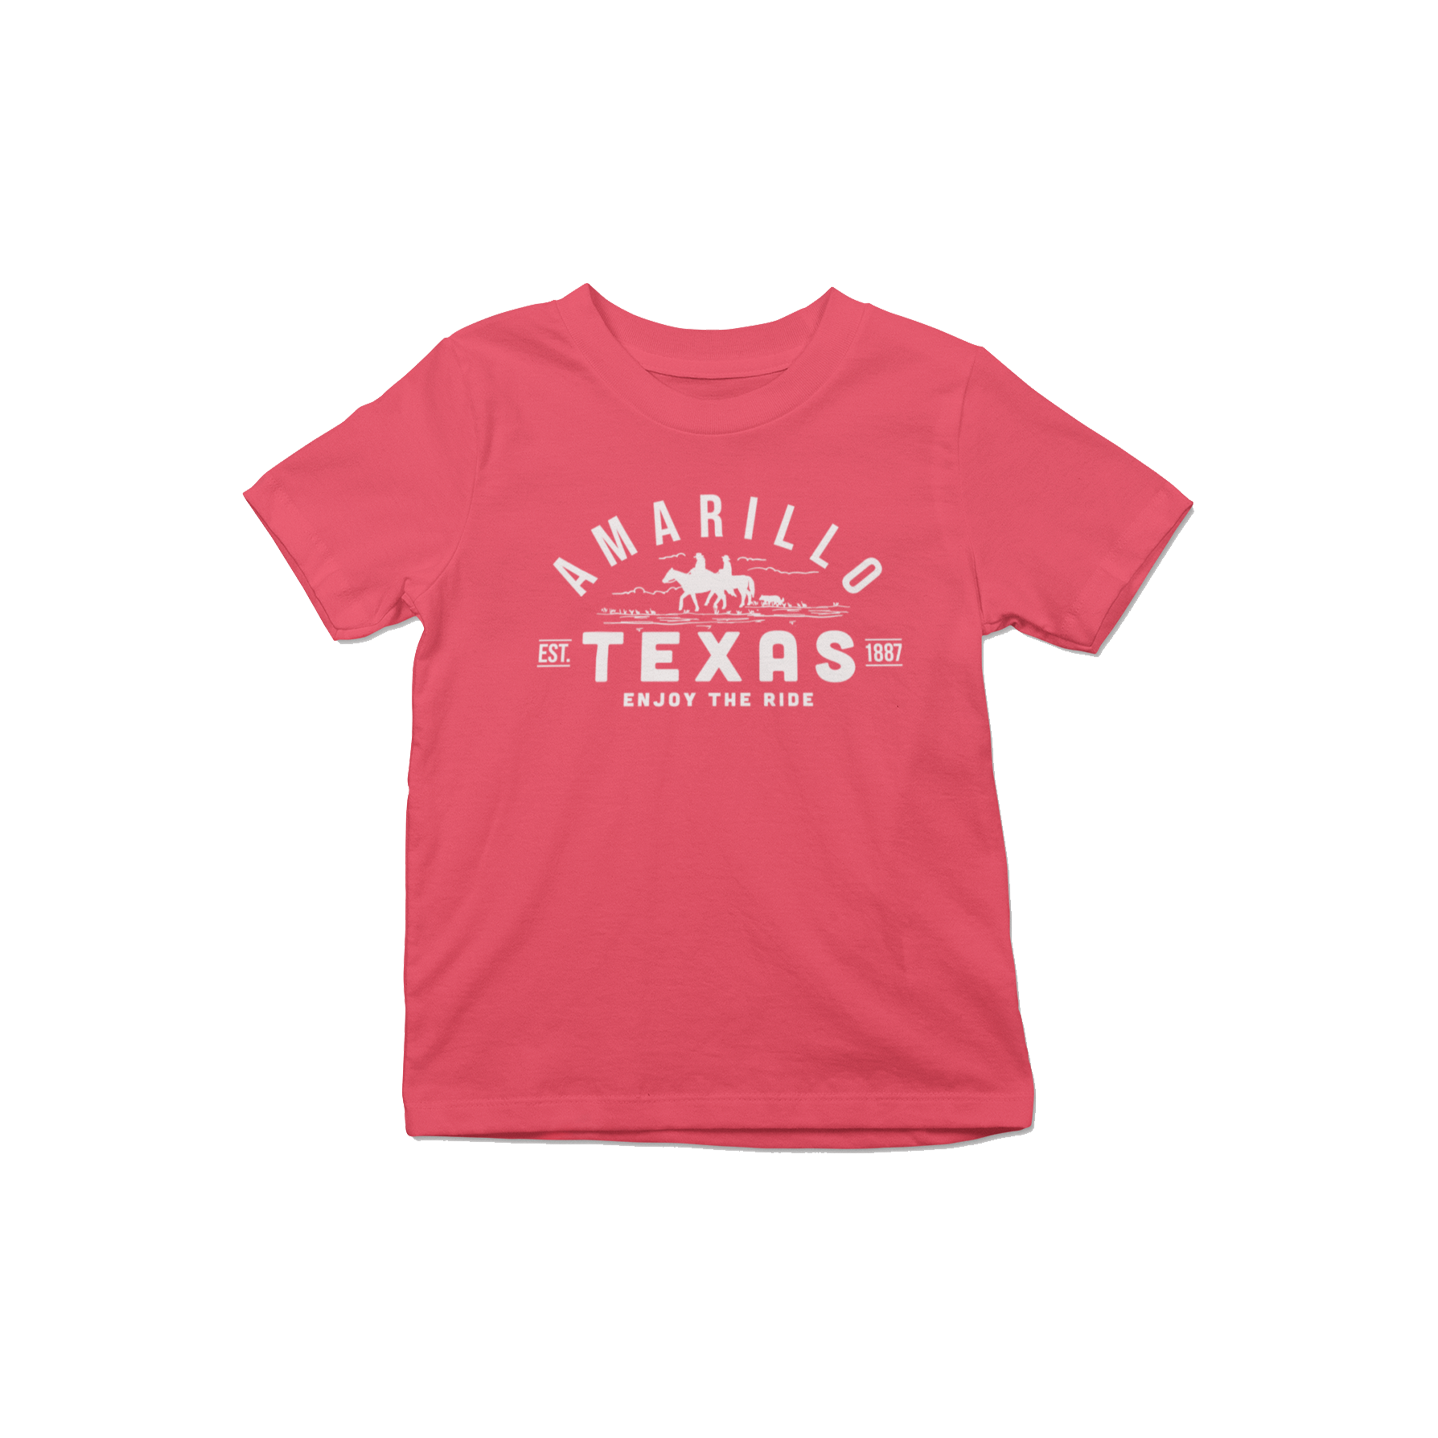 Amarillo Texas Toddler T-shirt - Enjoy the Ride